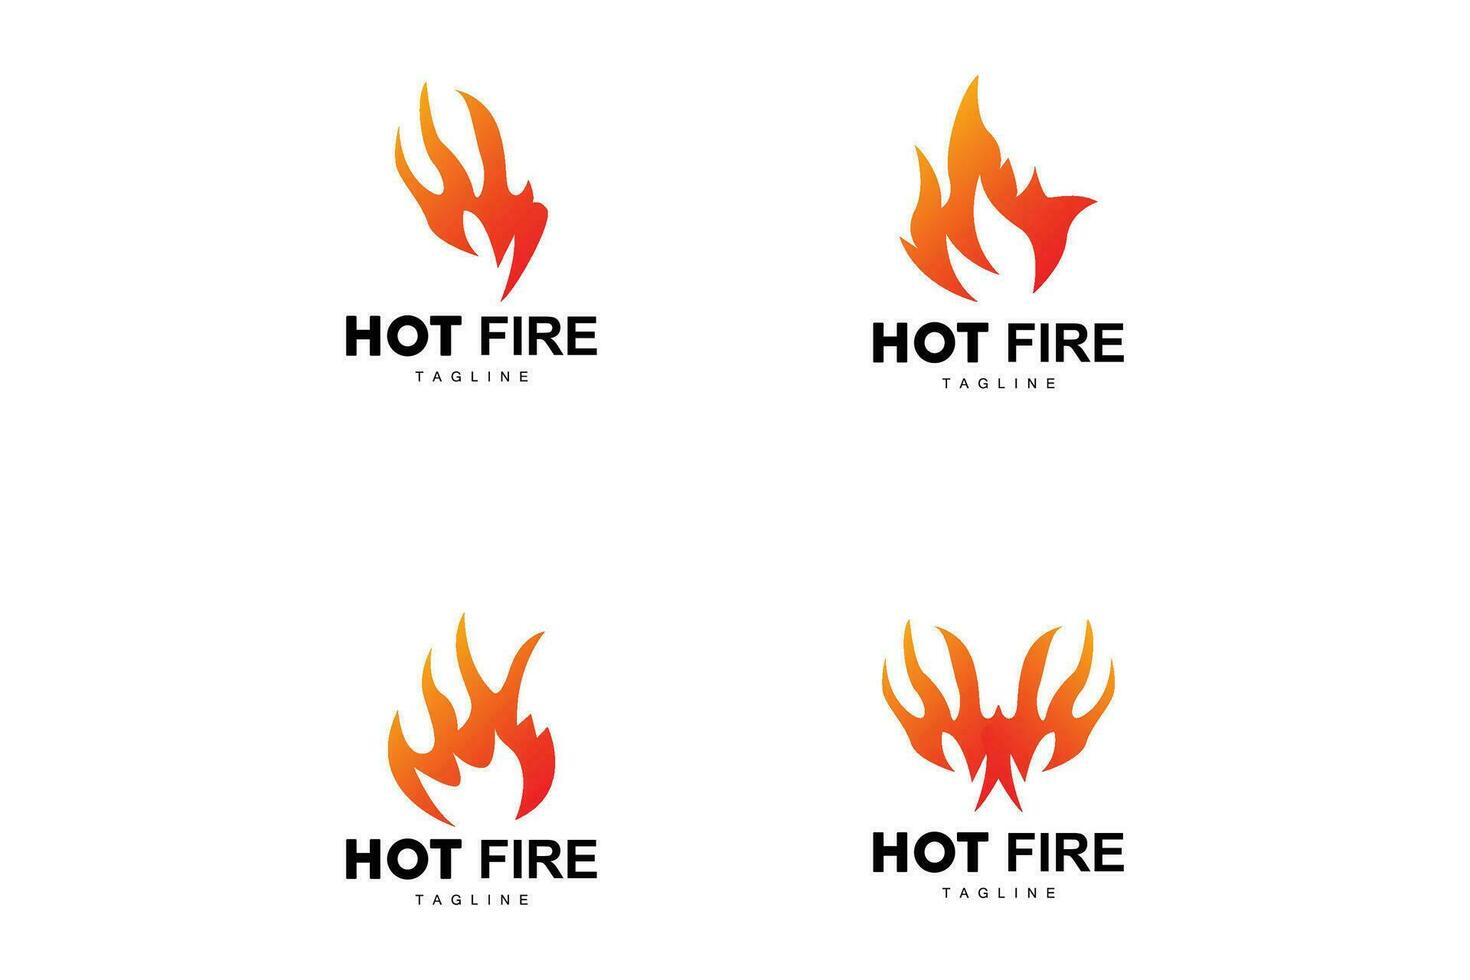 Fire Logo, Burning Hot Flame Vector, Simple Design Template Illustration vector